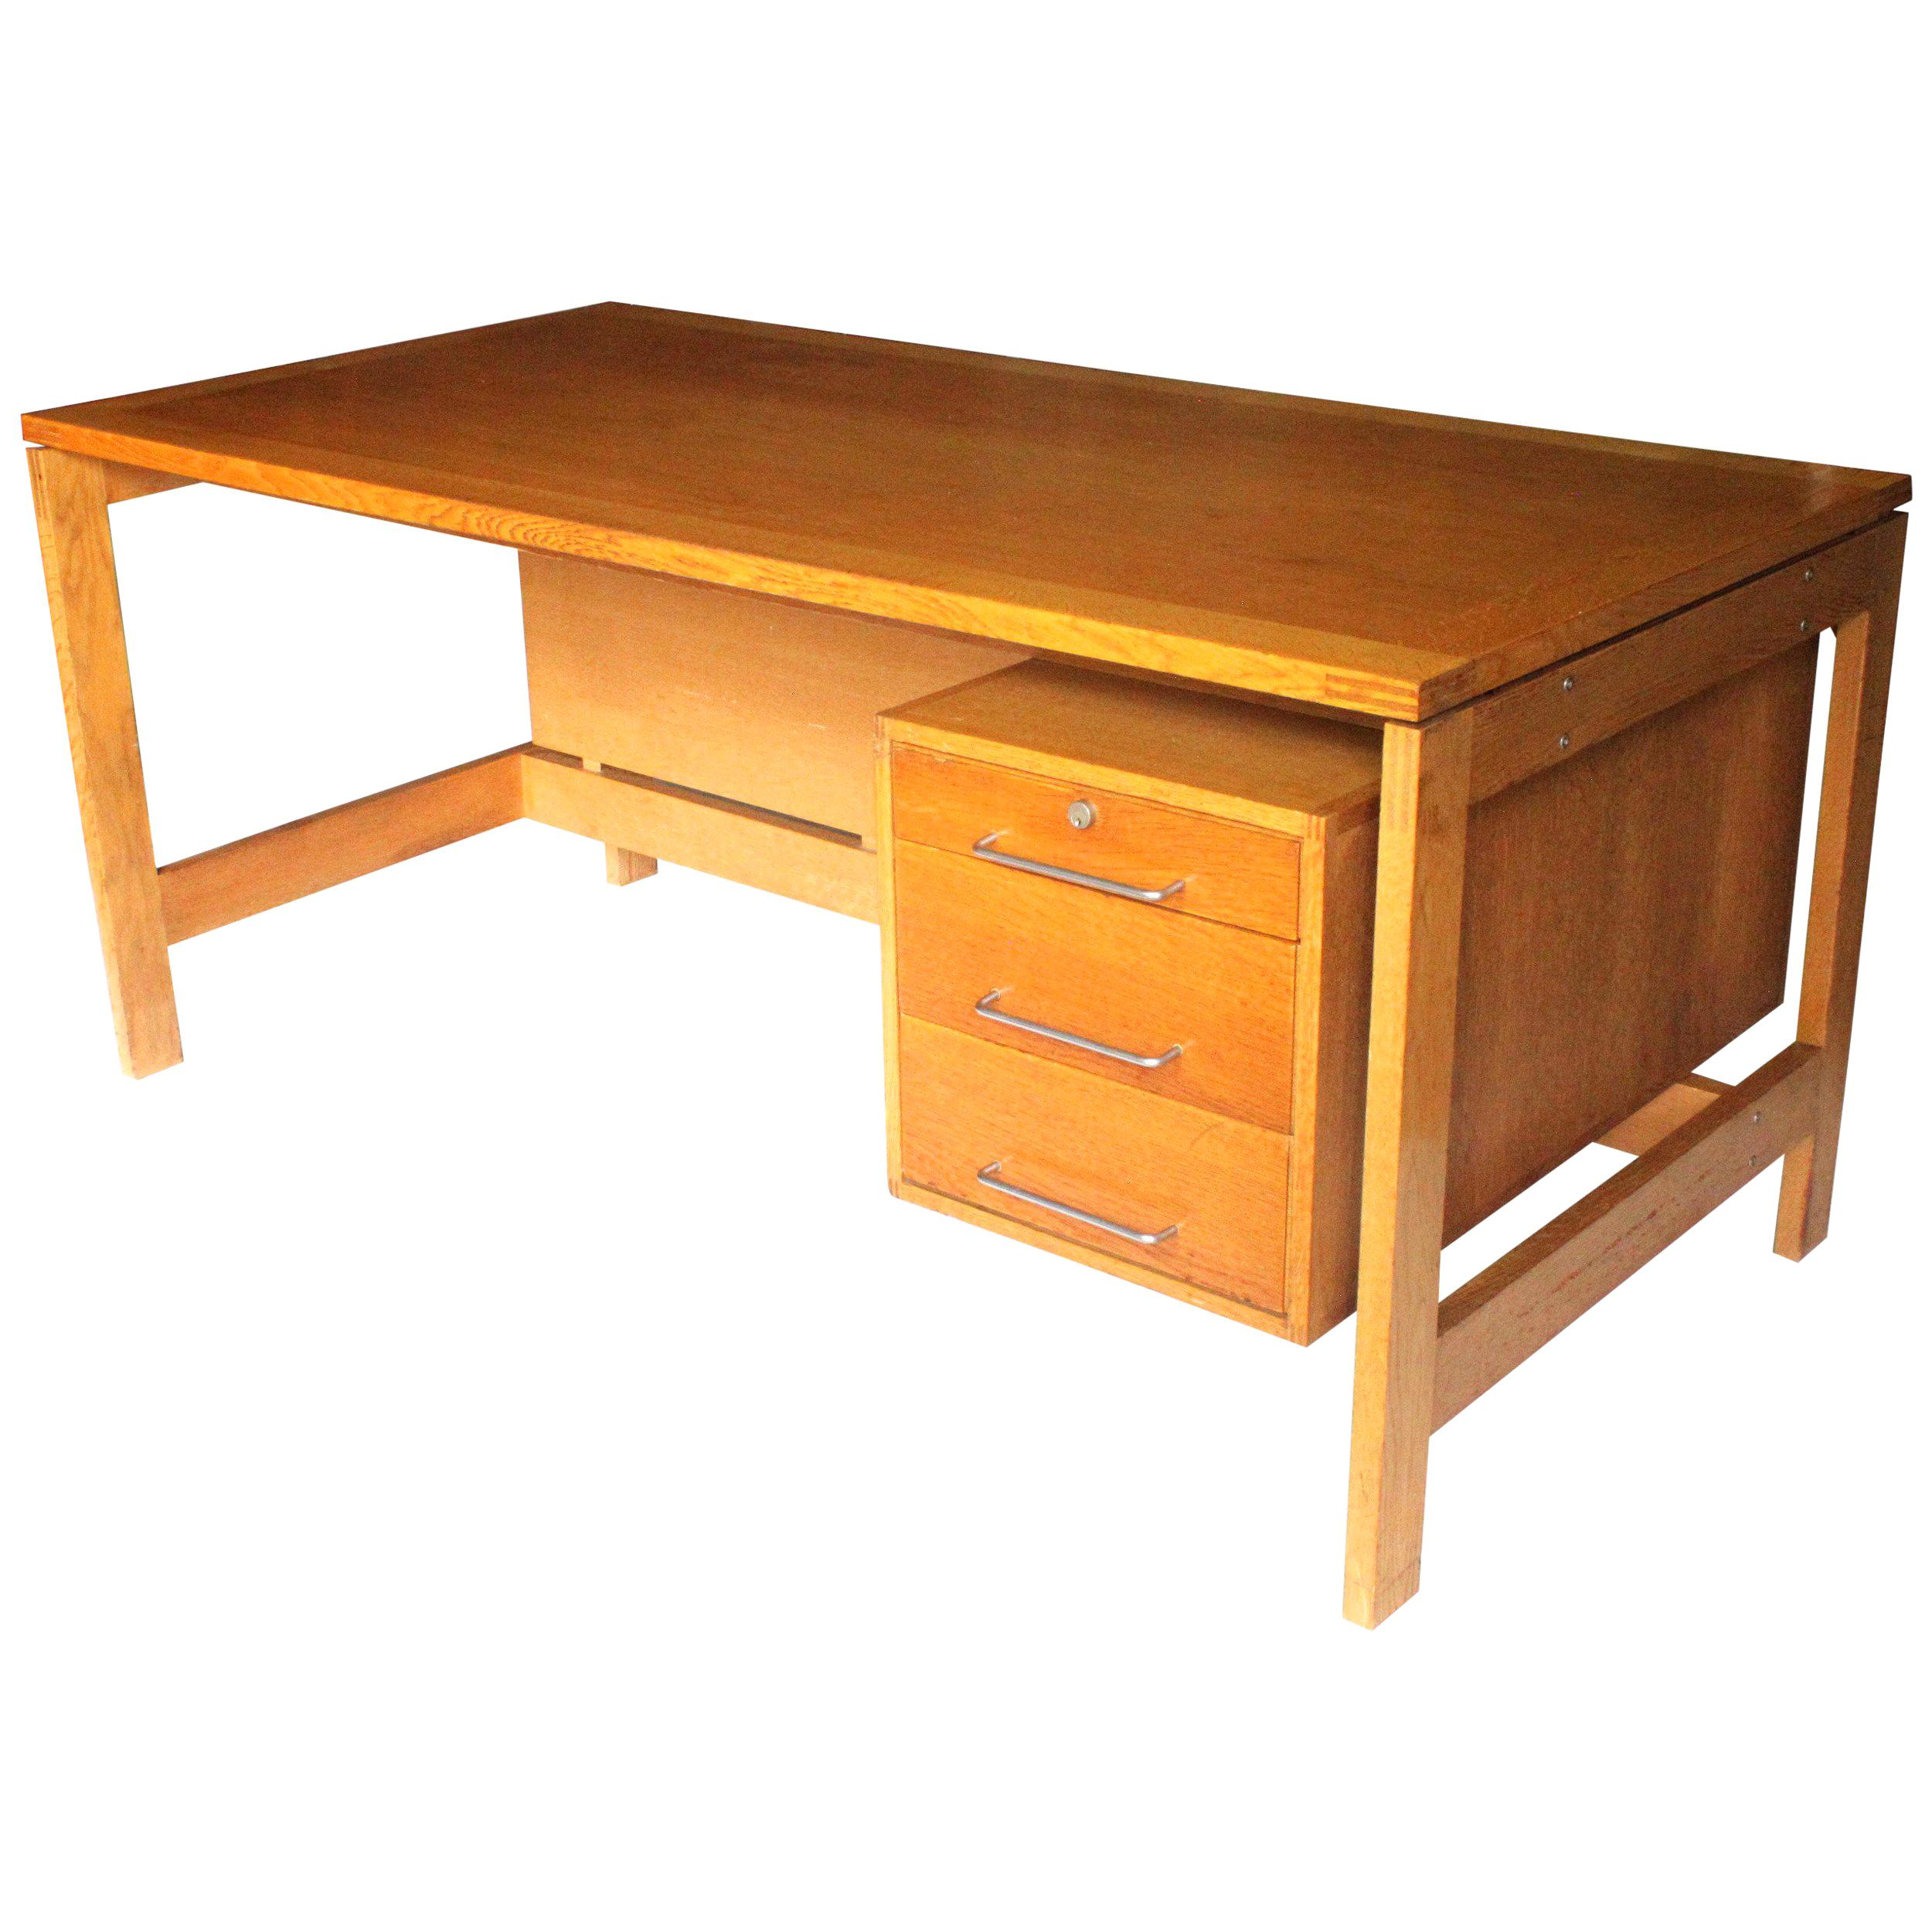 Vintage 1960s Midcentury Danish Modern Desk by Jensen & Valeur for Munch Møbler